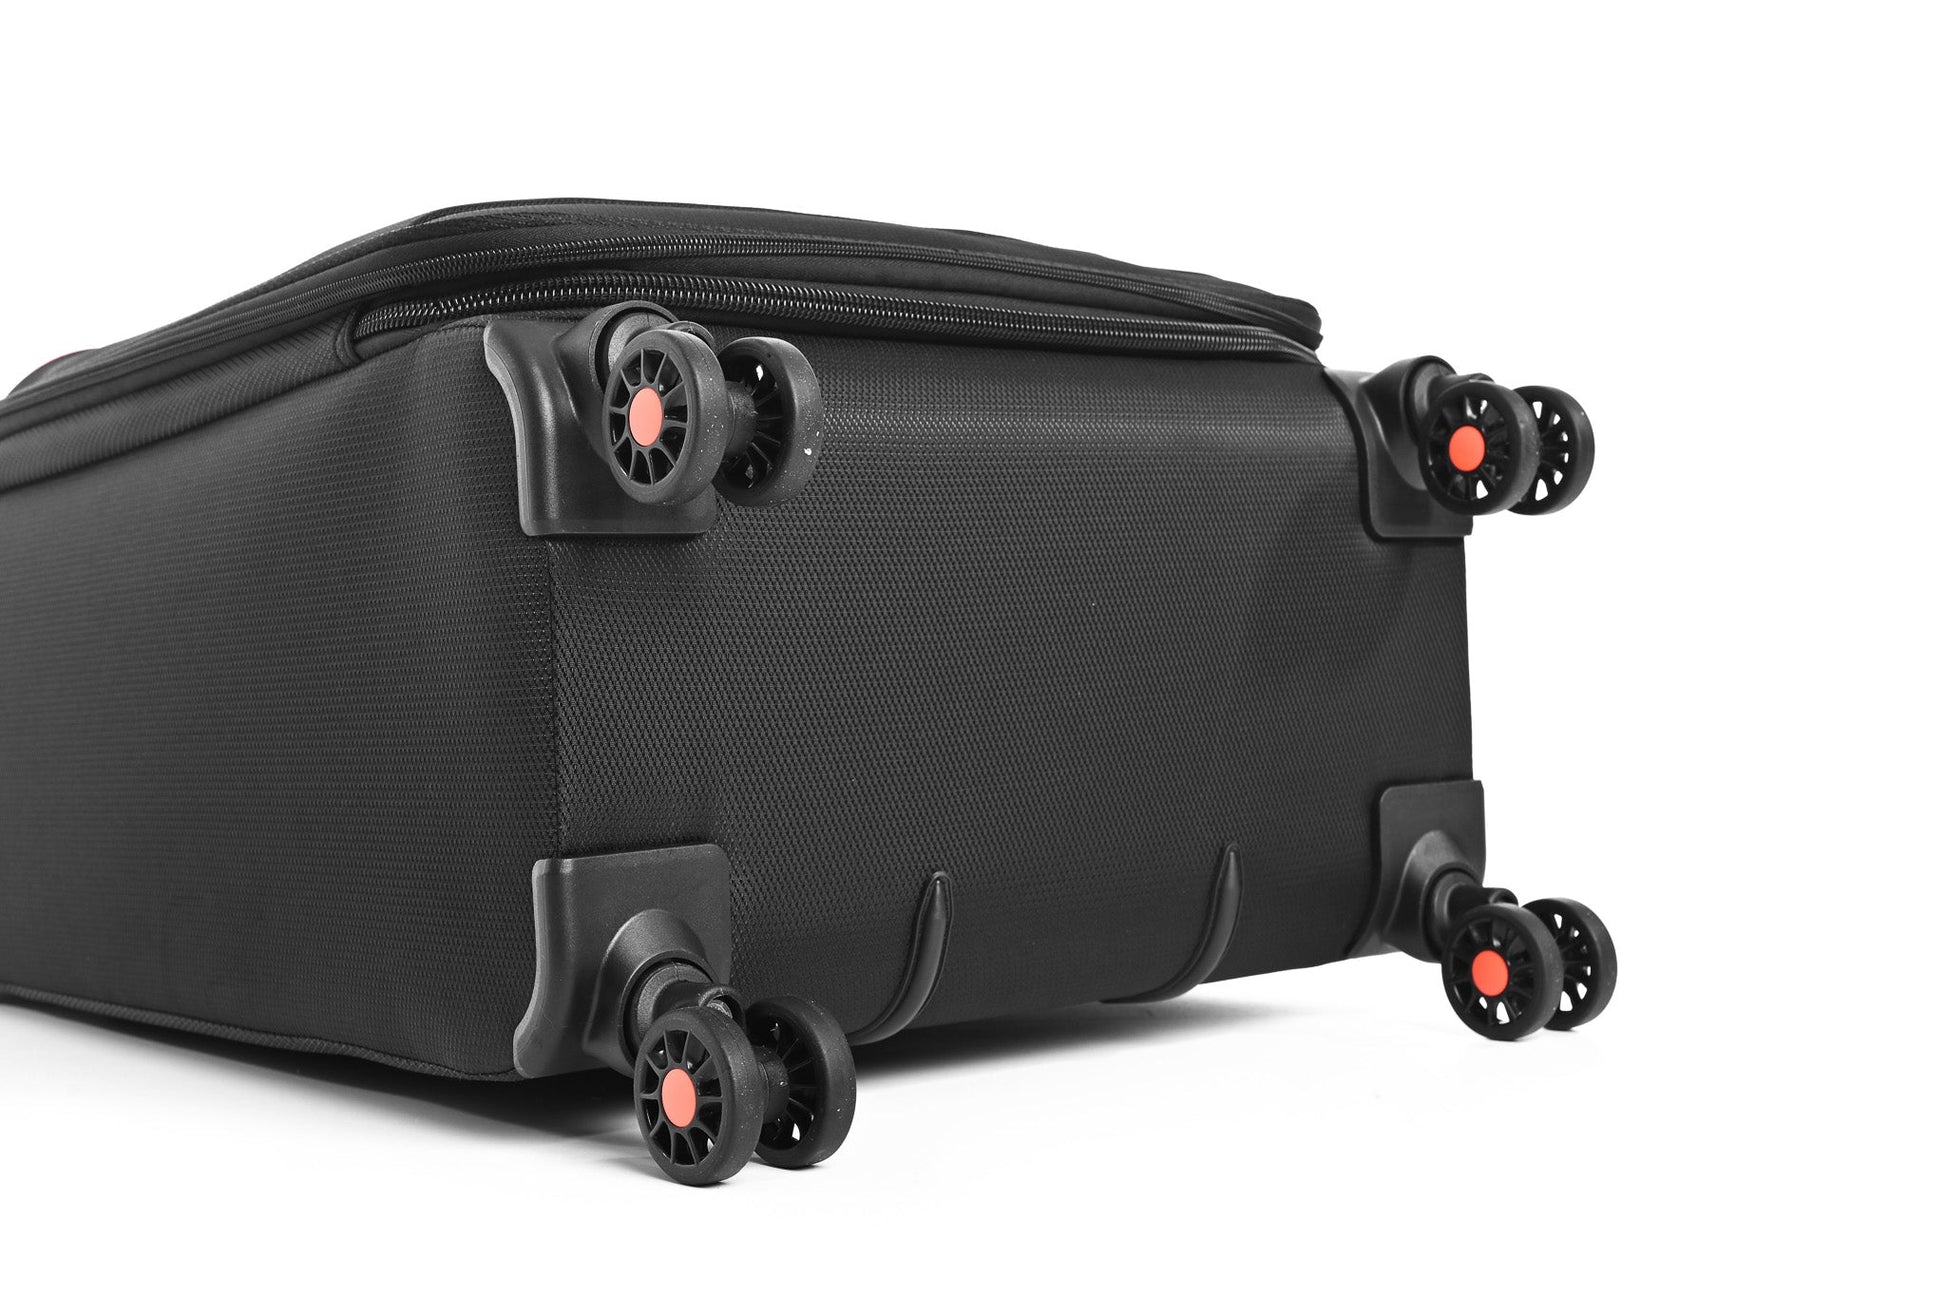 SLAZENGER - מזוודה מבד גדולה 28" דגם BARCELONA בצבע שחור - MASHBIR//365